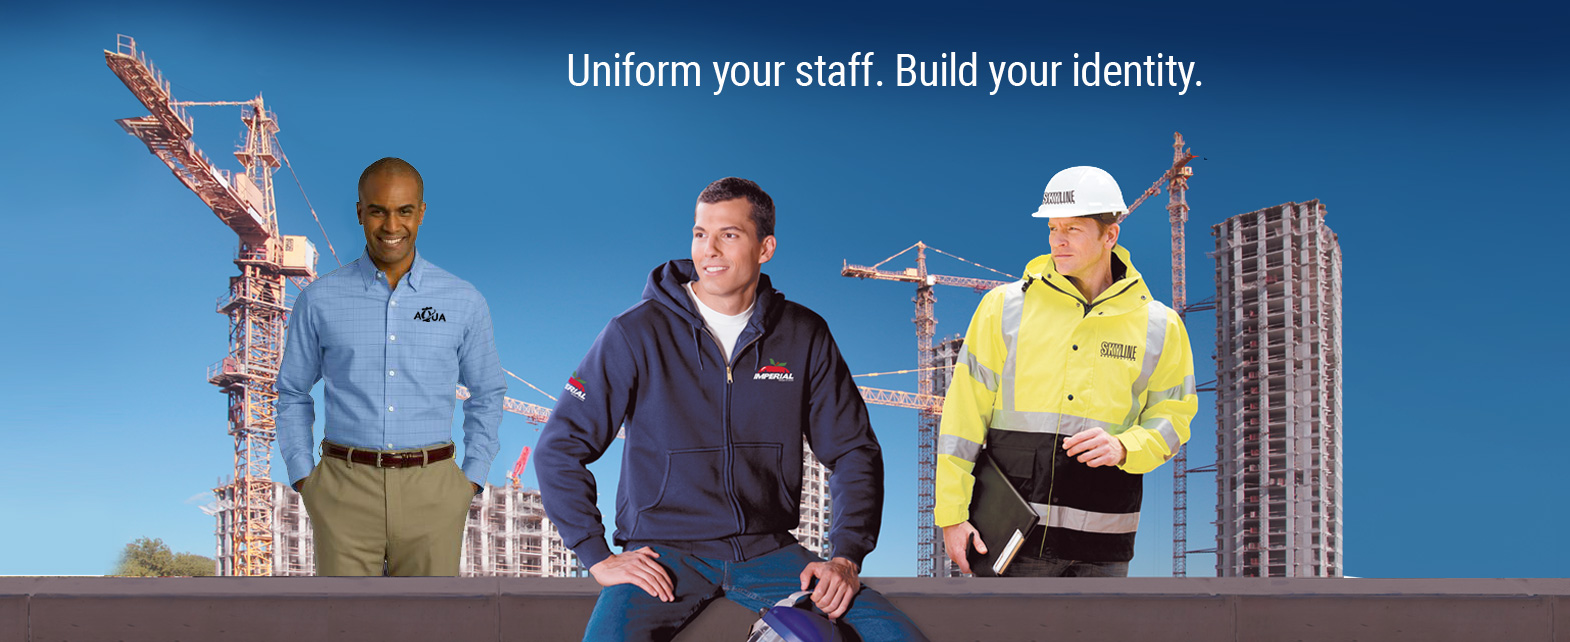 Uniform Your Staff. Build Your Identity.